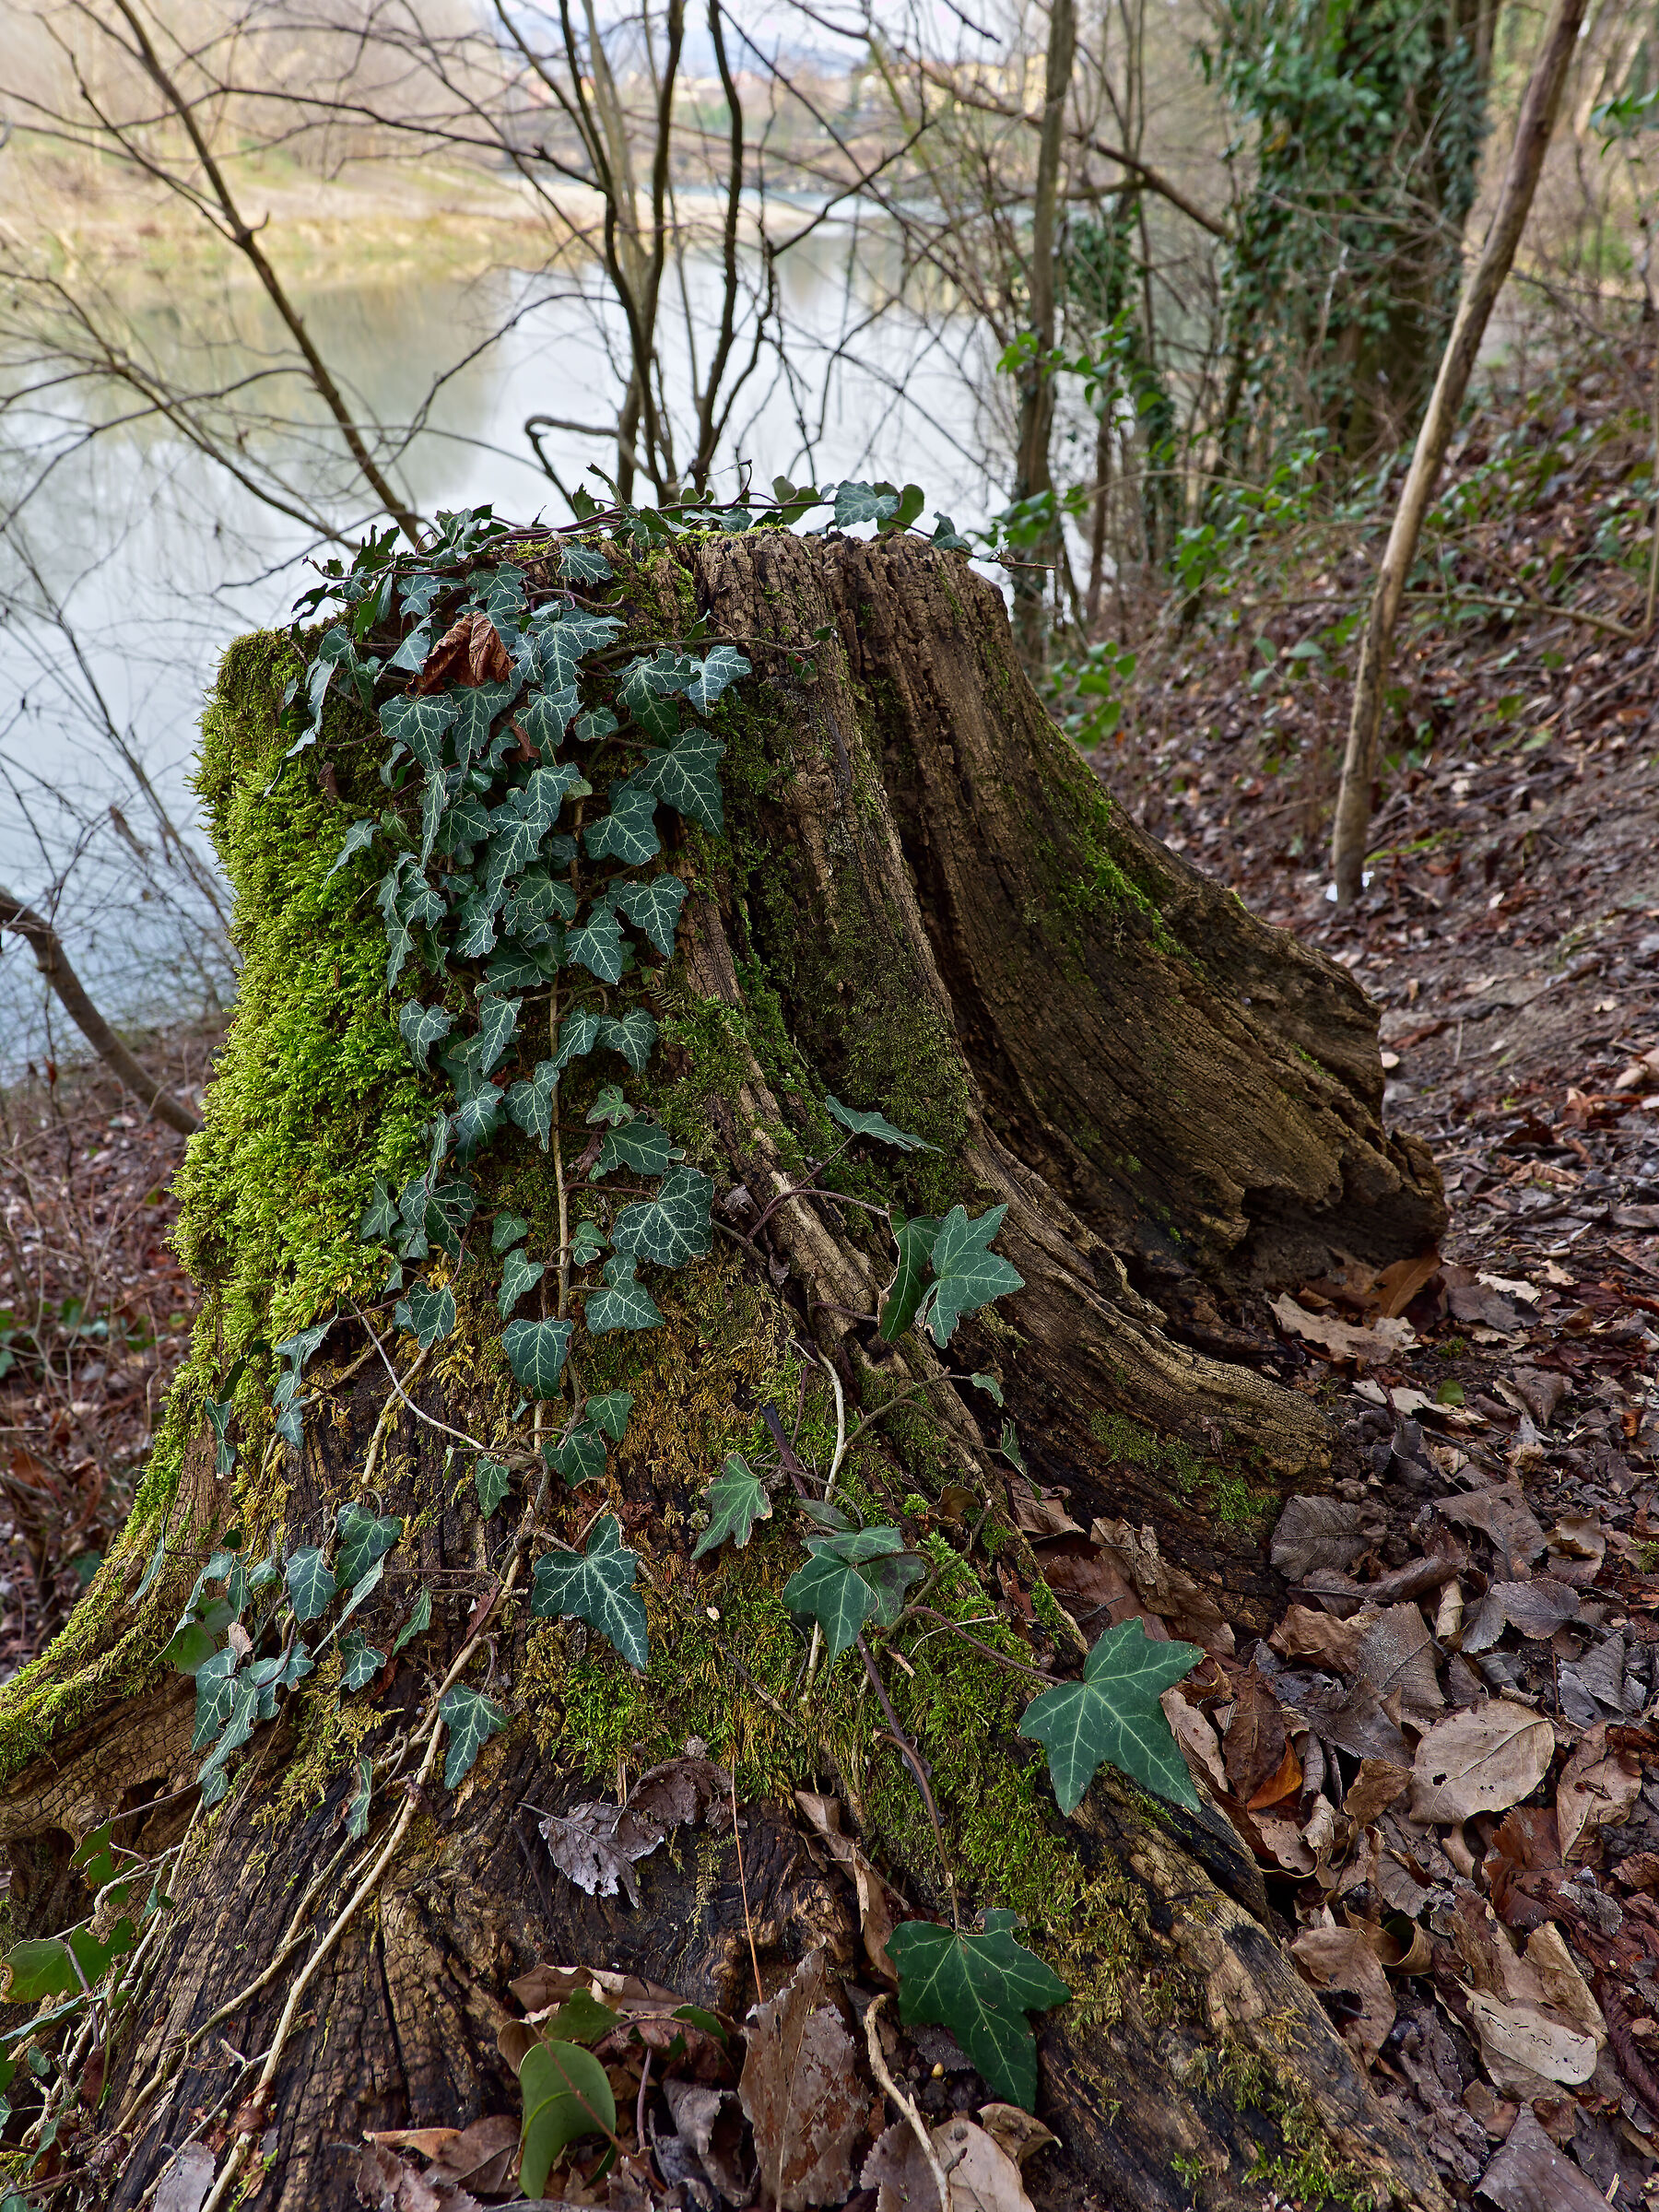 The stump on the embankment...